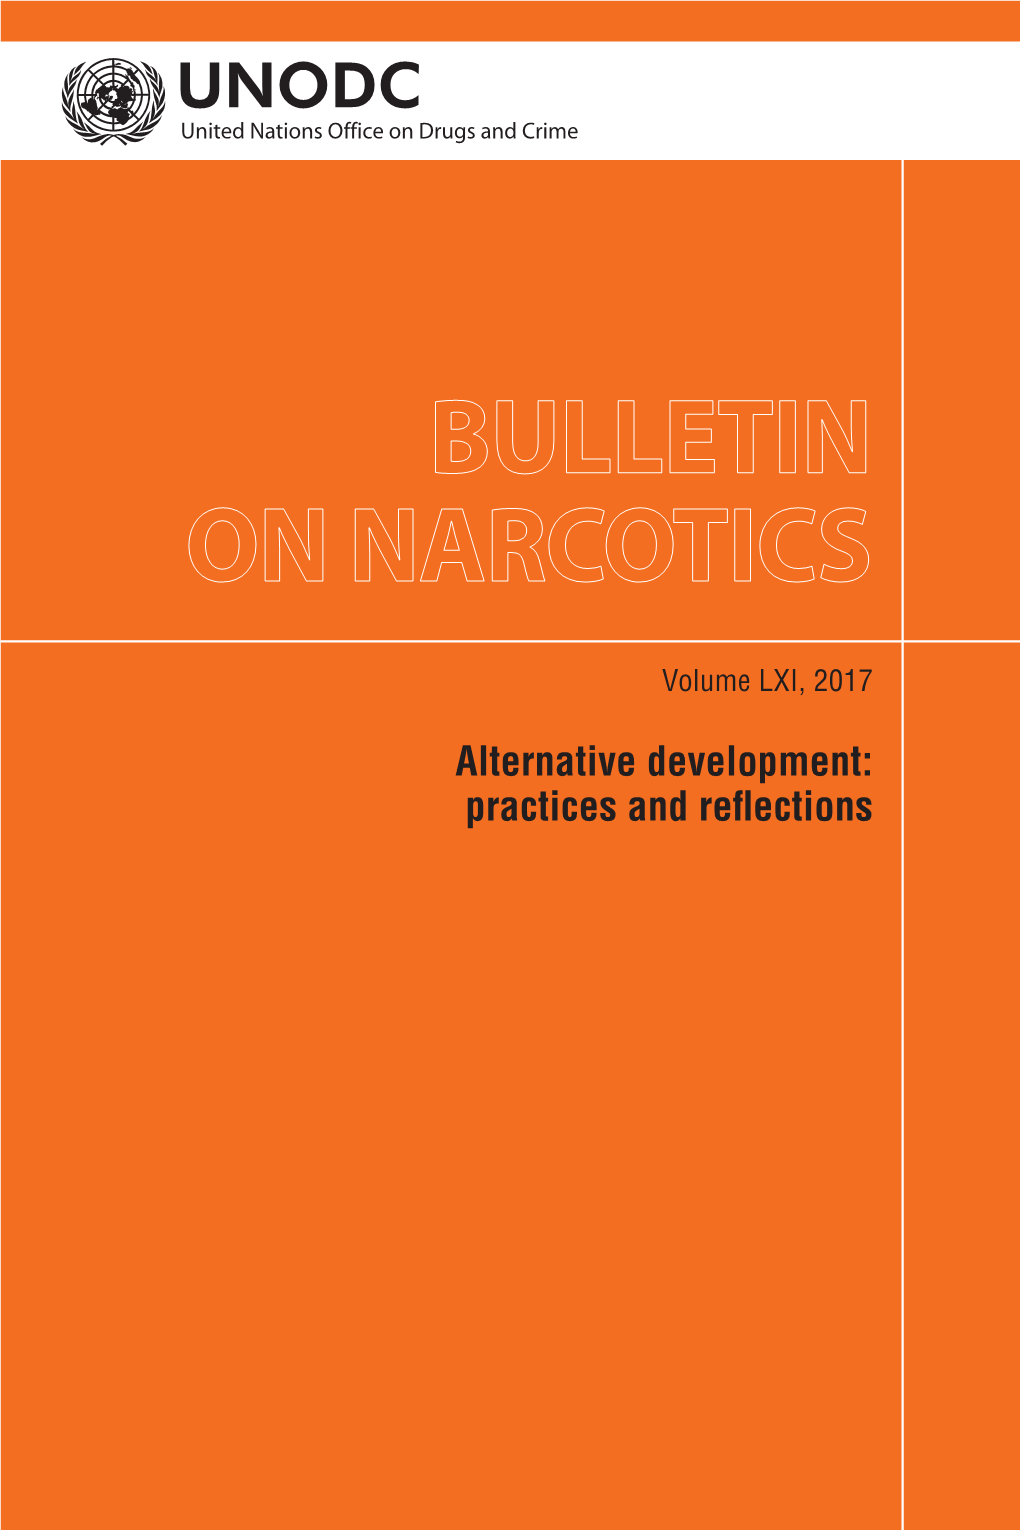 BULLETIN on NARCOTICS Volume LXI, 2017